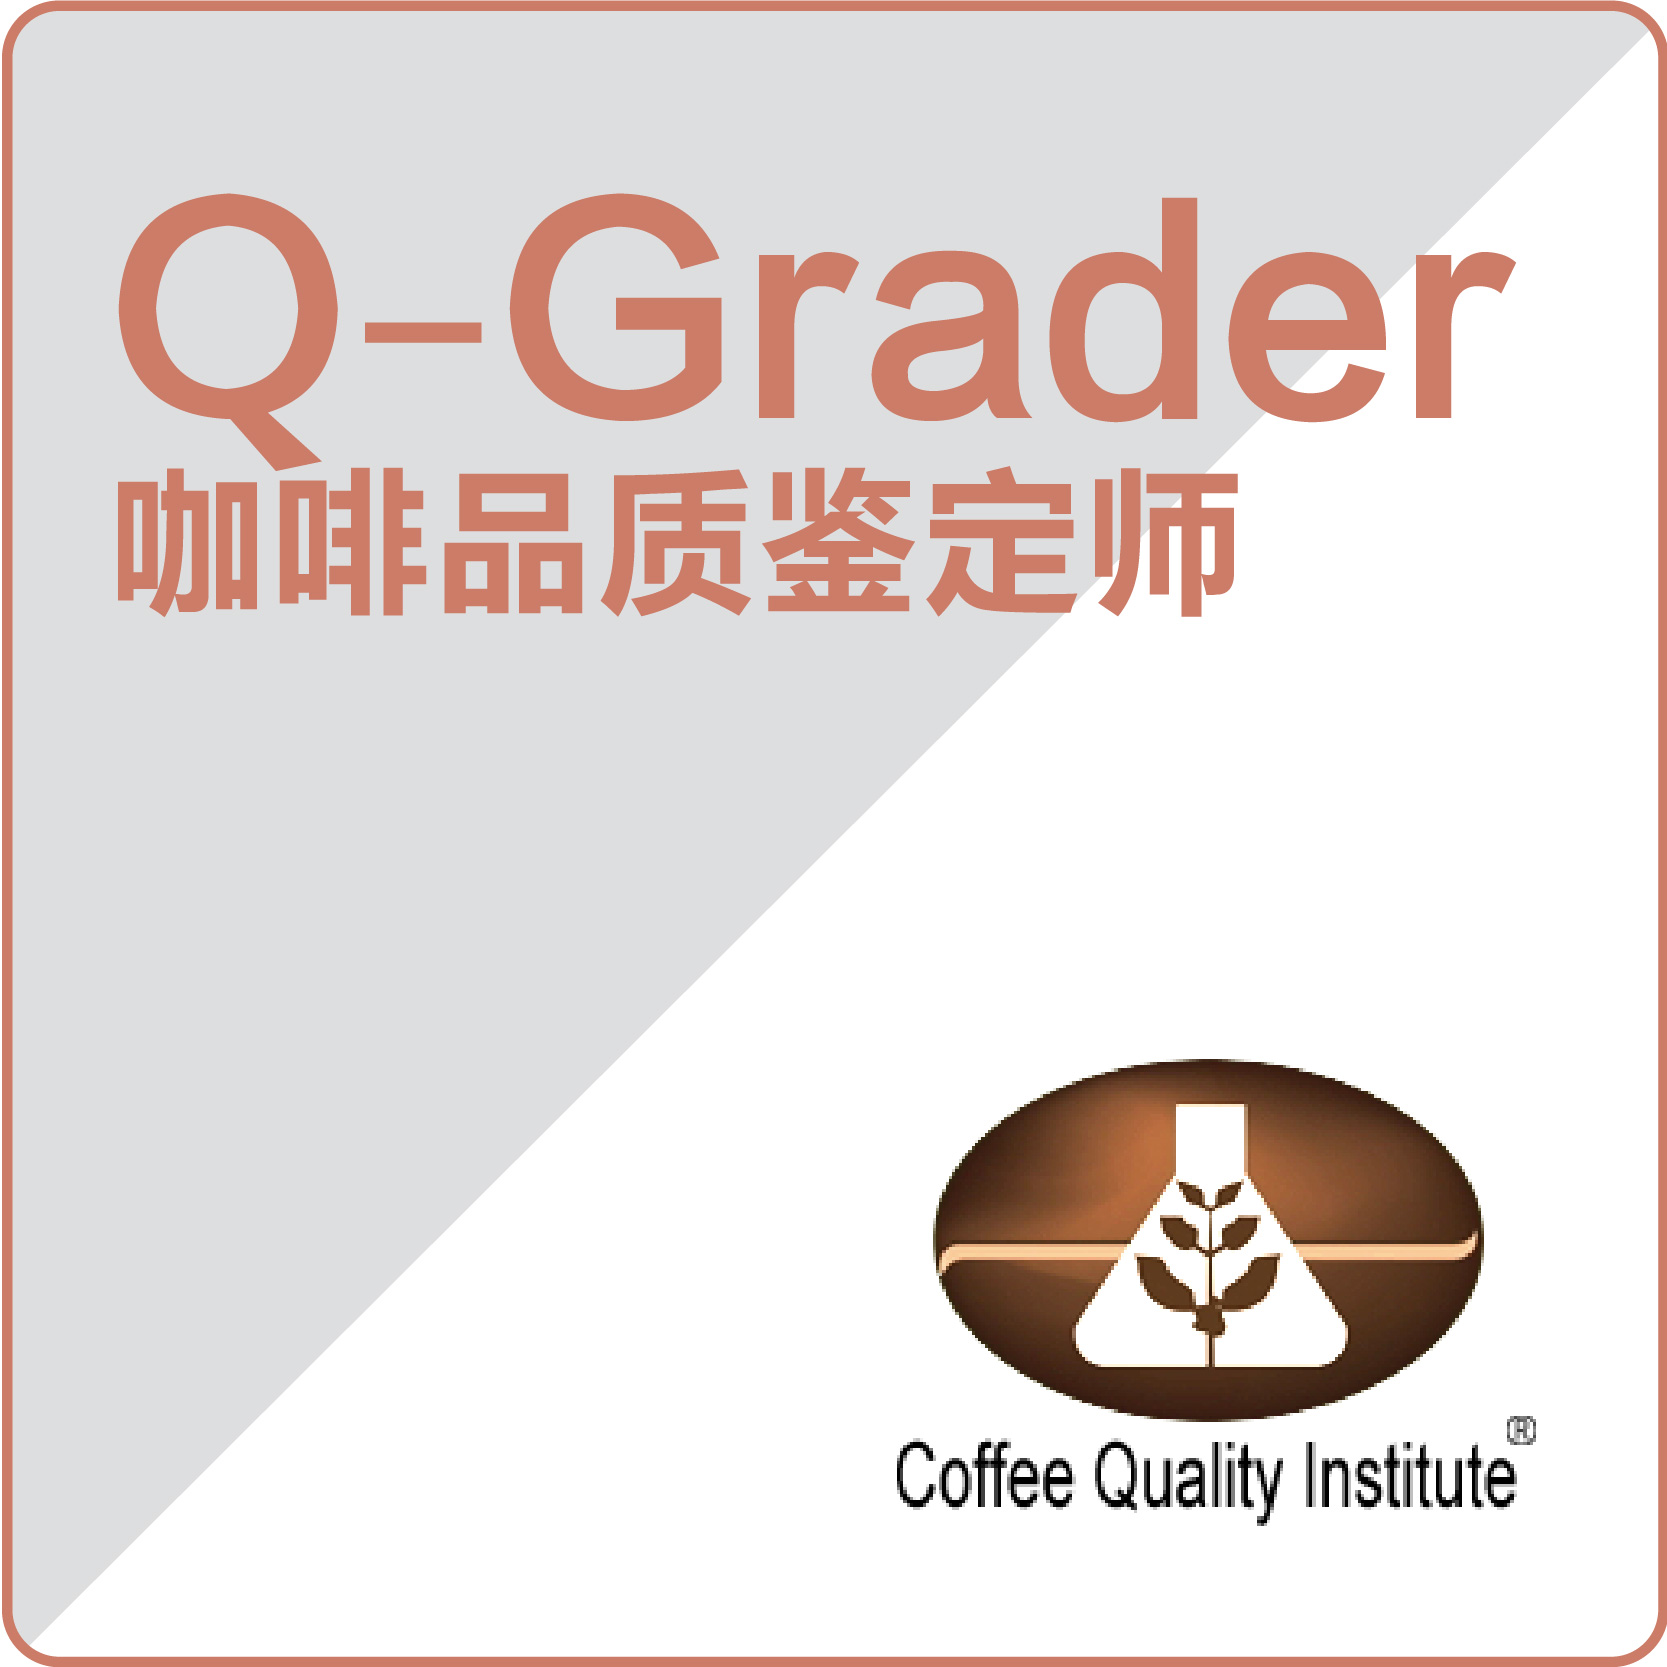 【广州补考】CQI Q-Grader 国际咖啡品质鉴定师